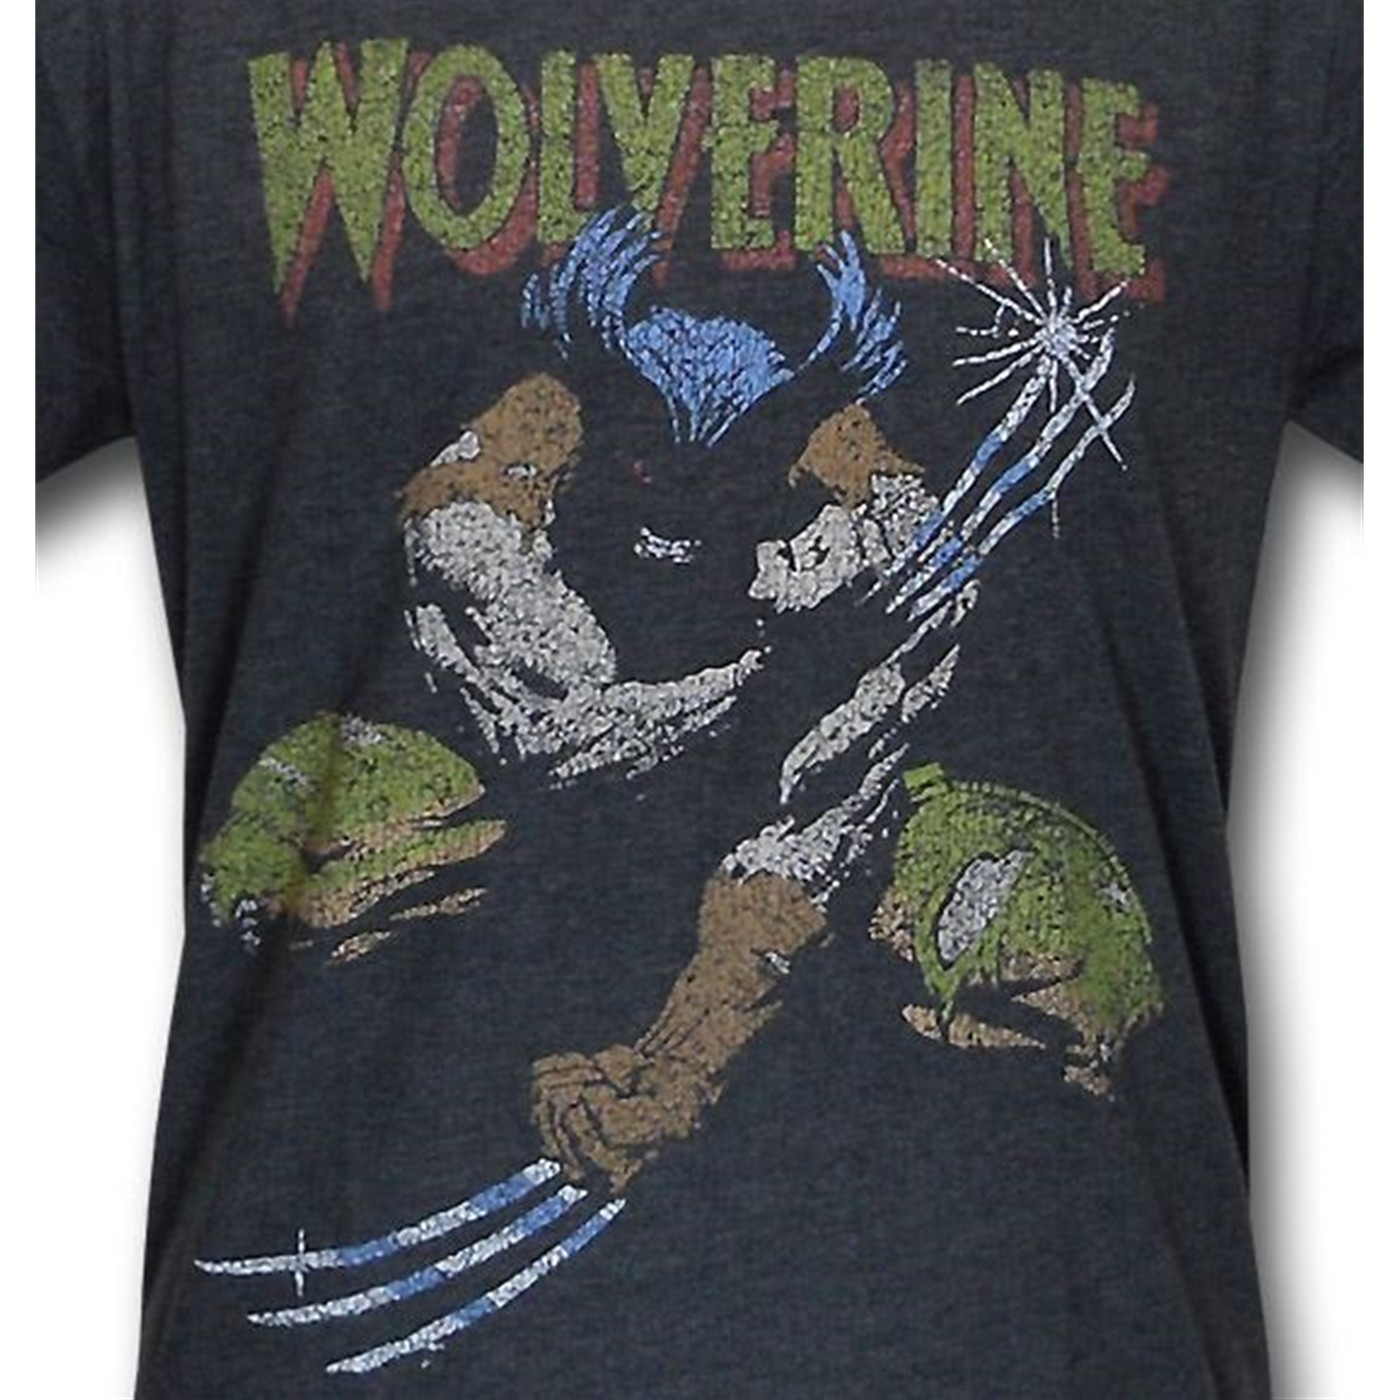 Wolverine Sam Keith Distressed Junk Food T-Shirt